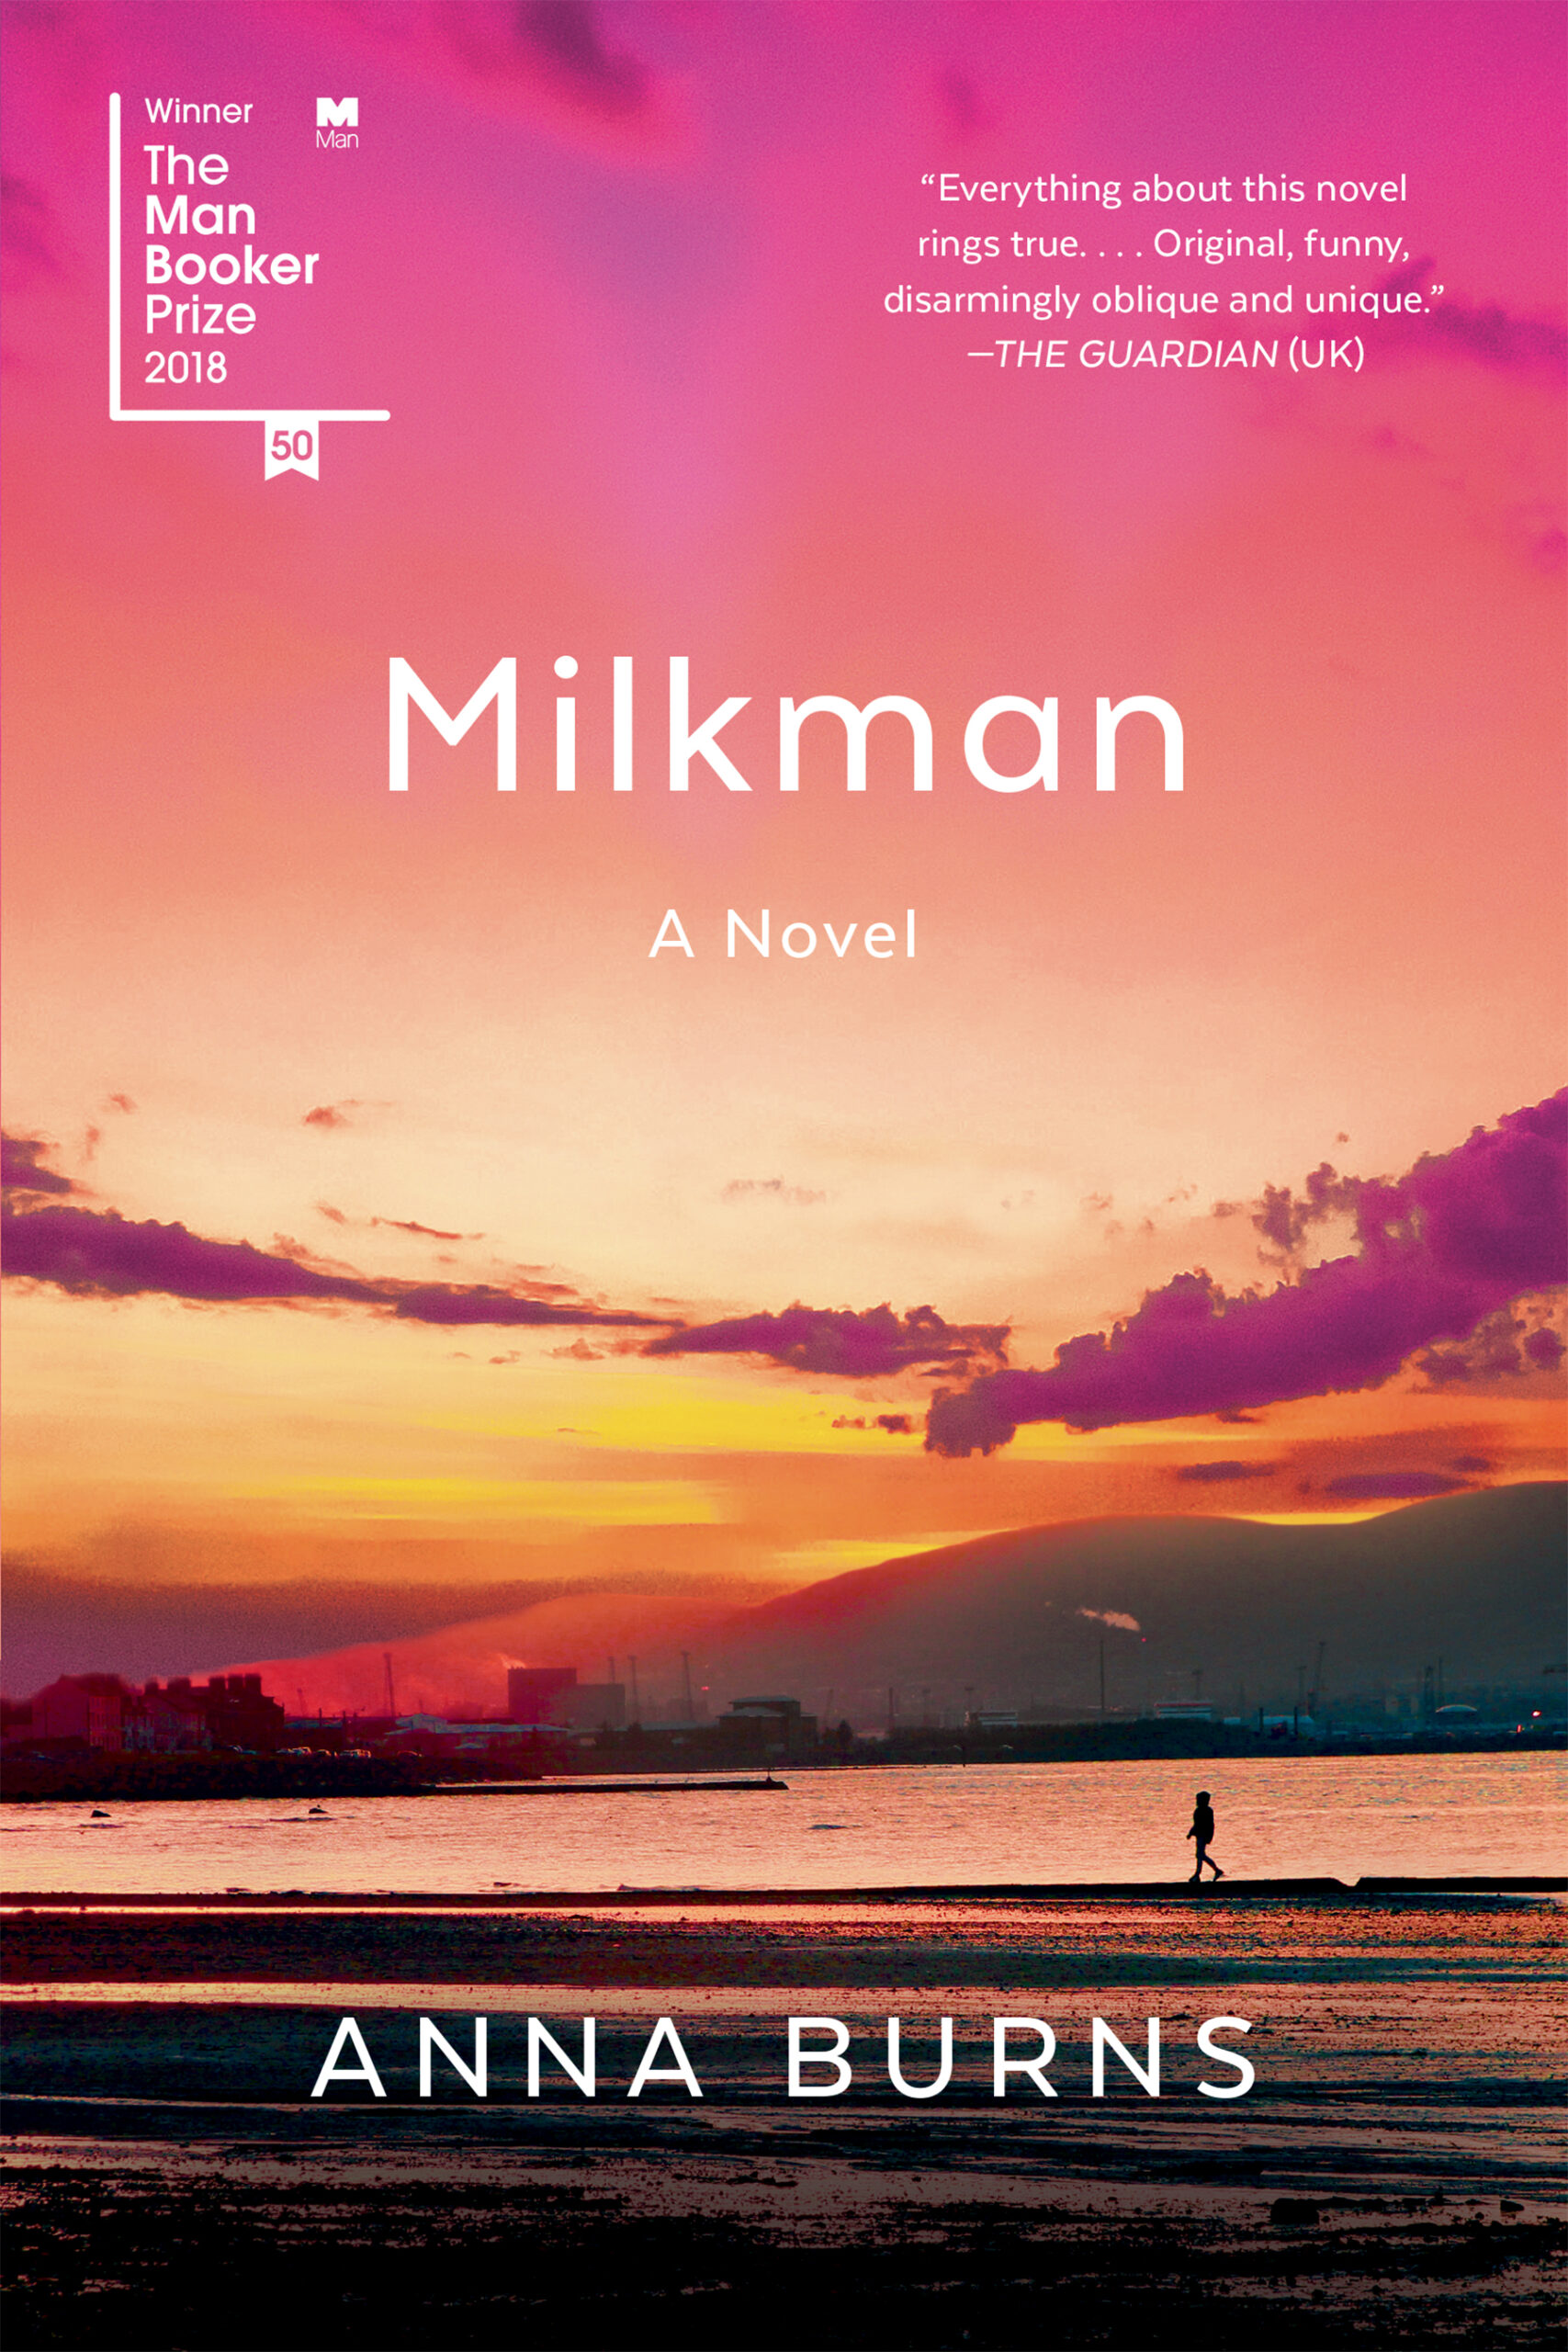 BOOK: Anna Burns, Milkman